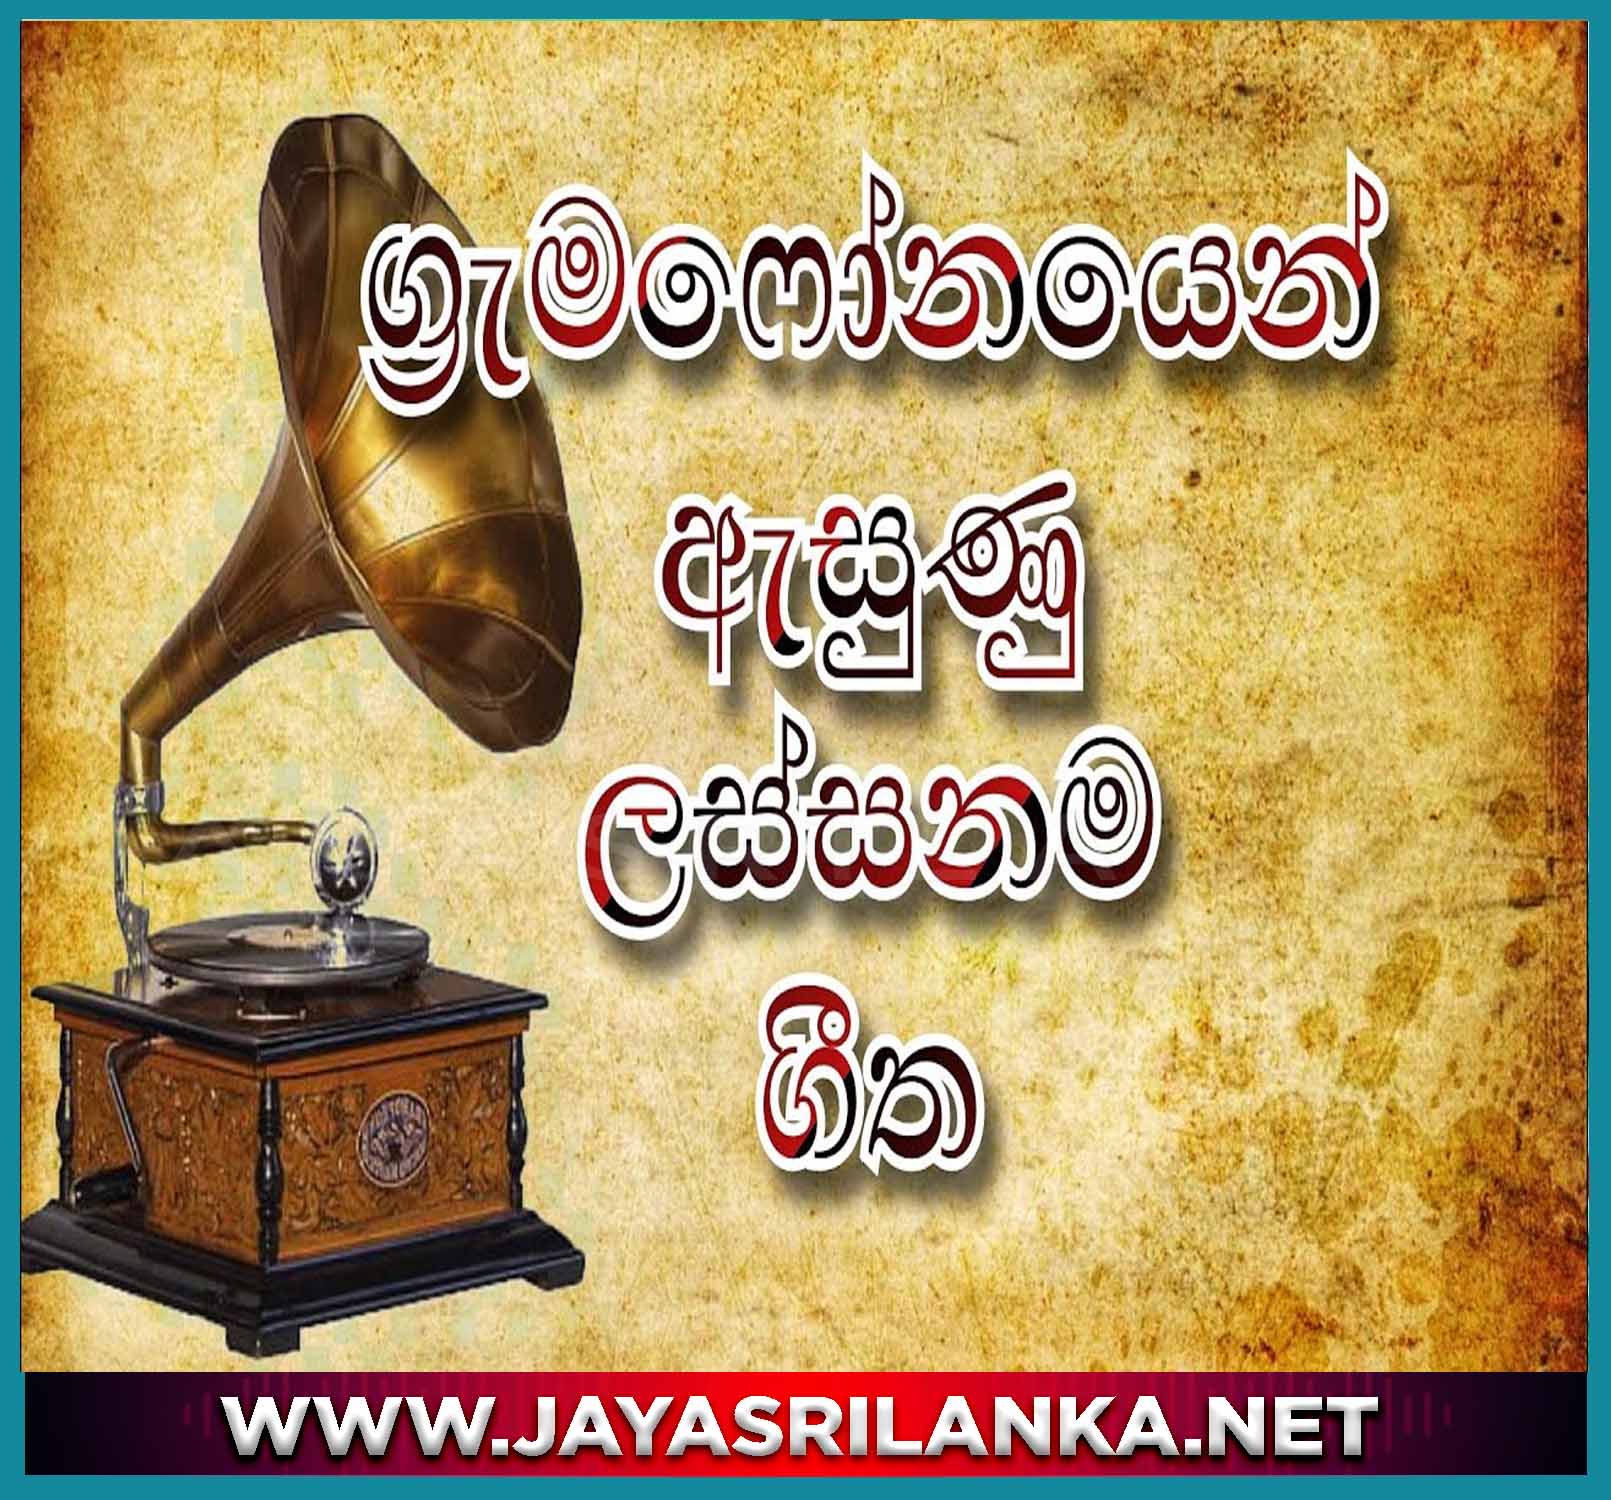 Atha Chandana Hime - Gramophone Songs mp3 Image